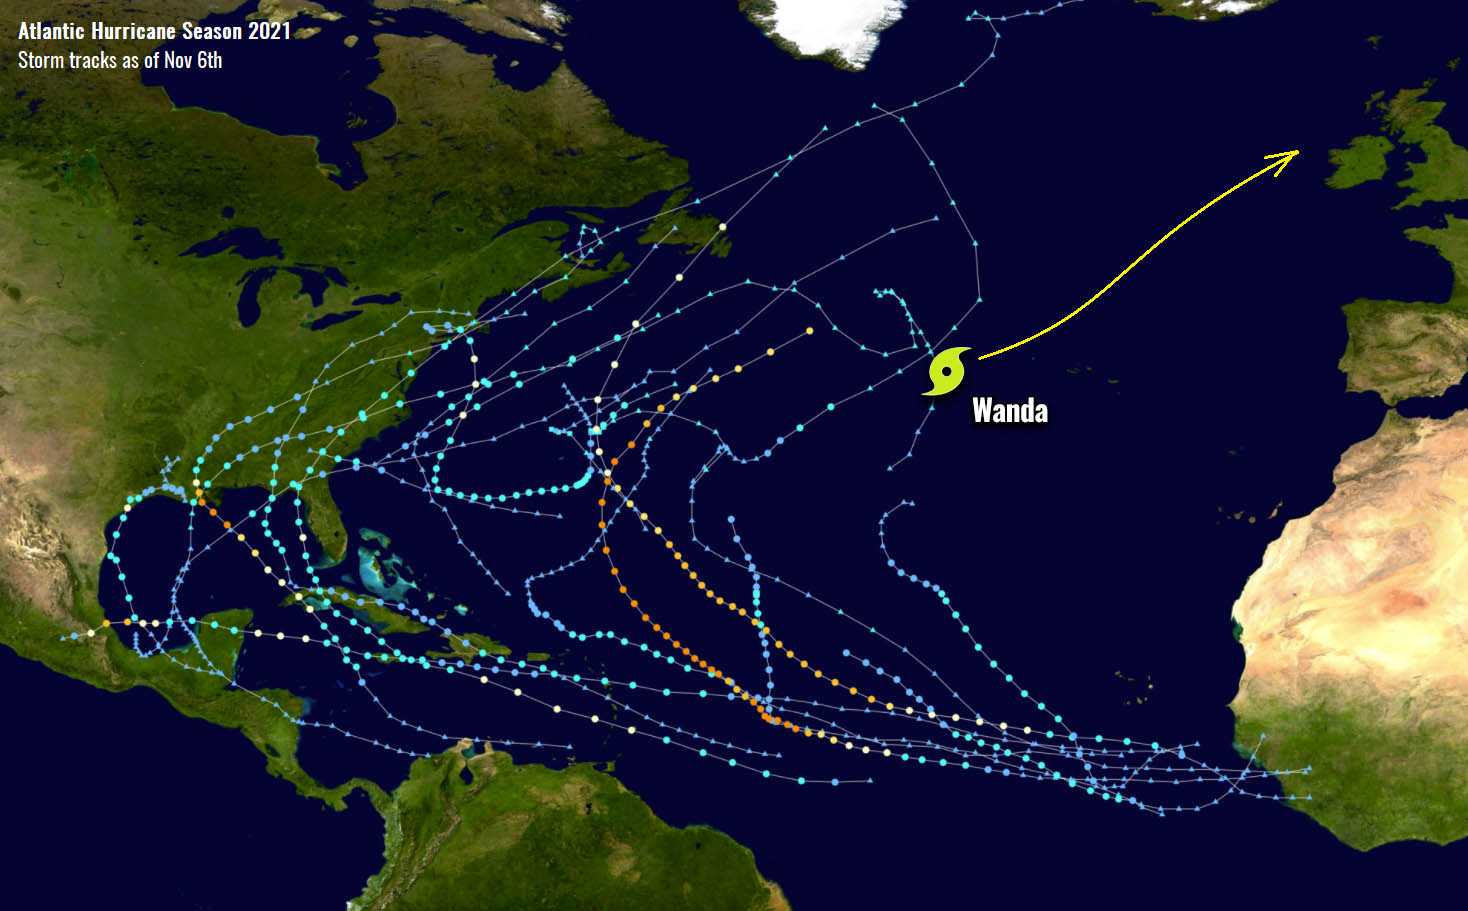 atlantic-hurricane-season-2021-storm-wanda-ireland-europe-seasonal-statistics